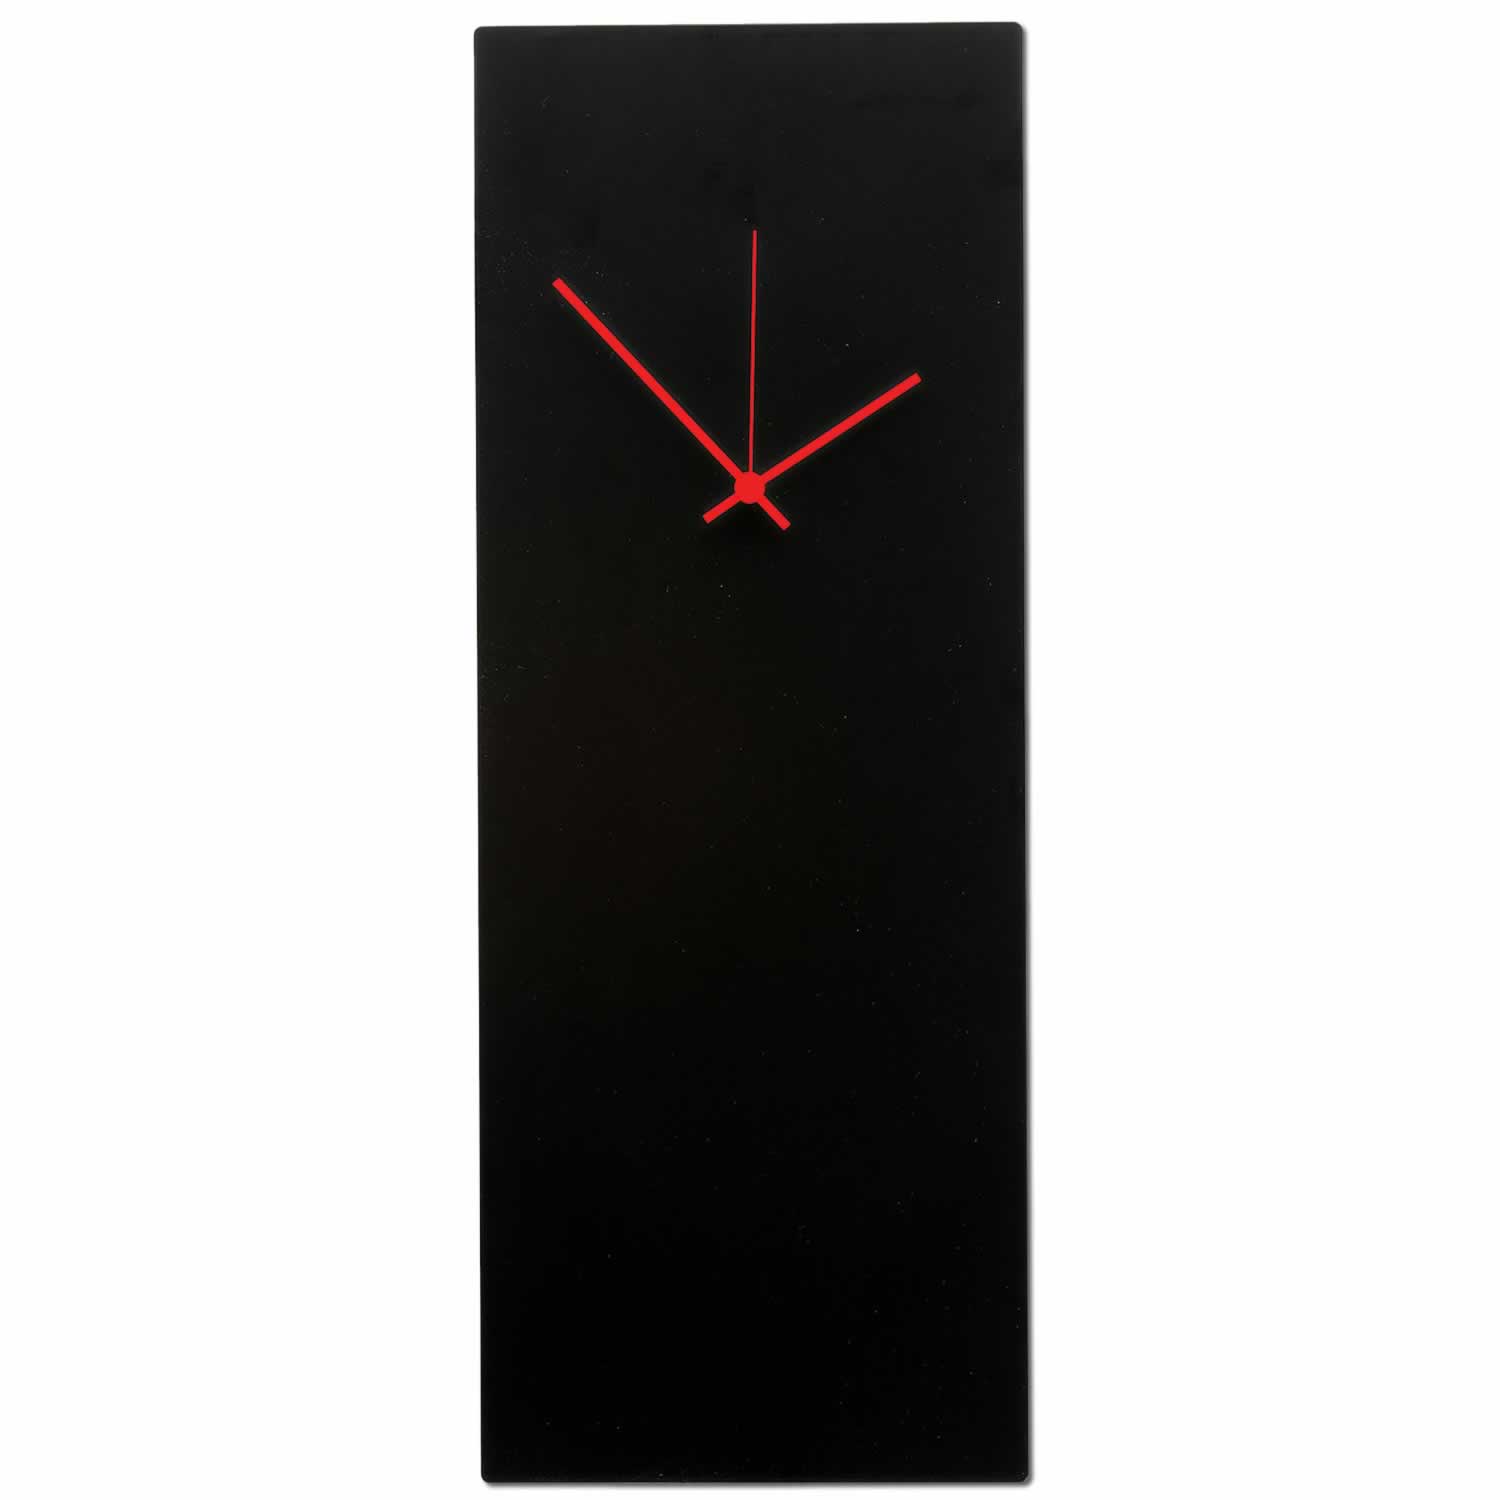 Blackout Red Wall Clock Large - Minimalist Modern